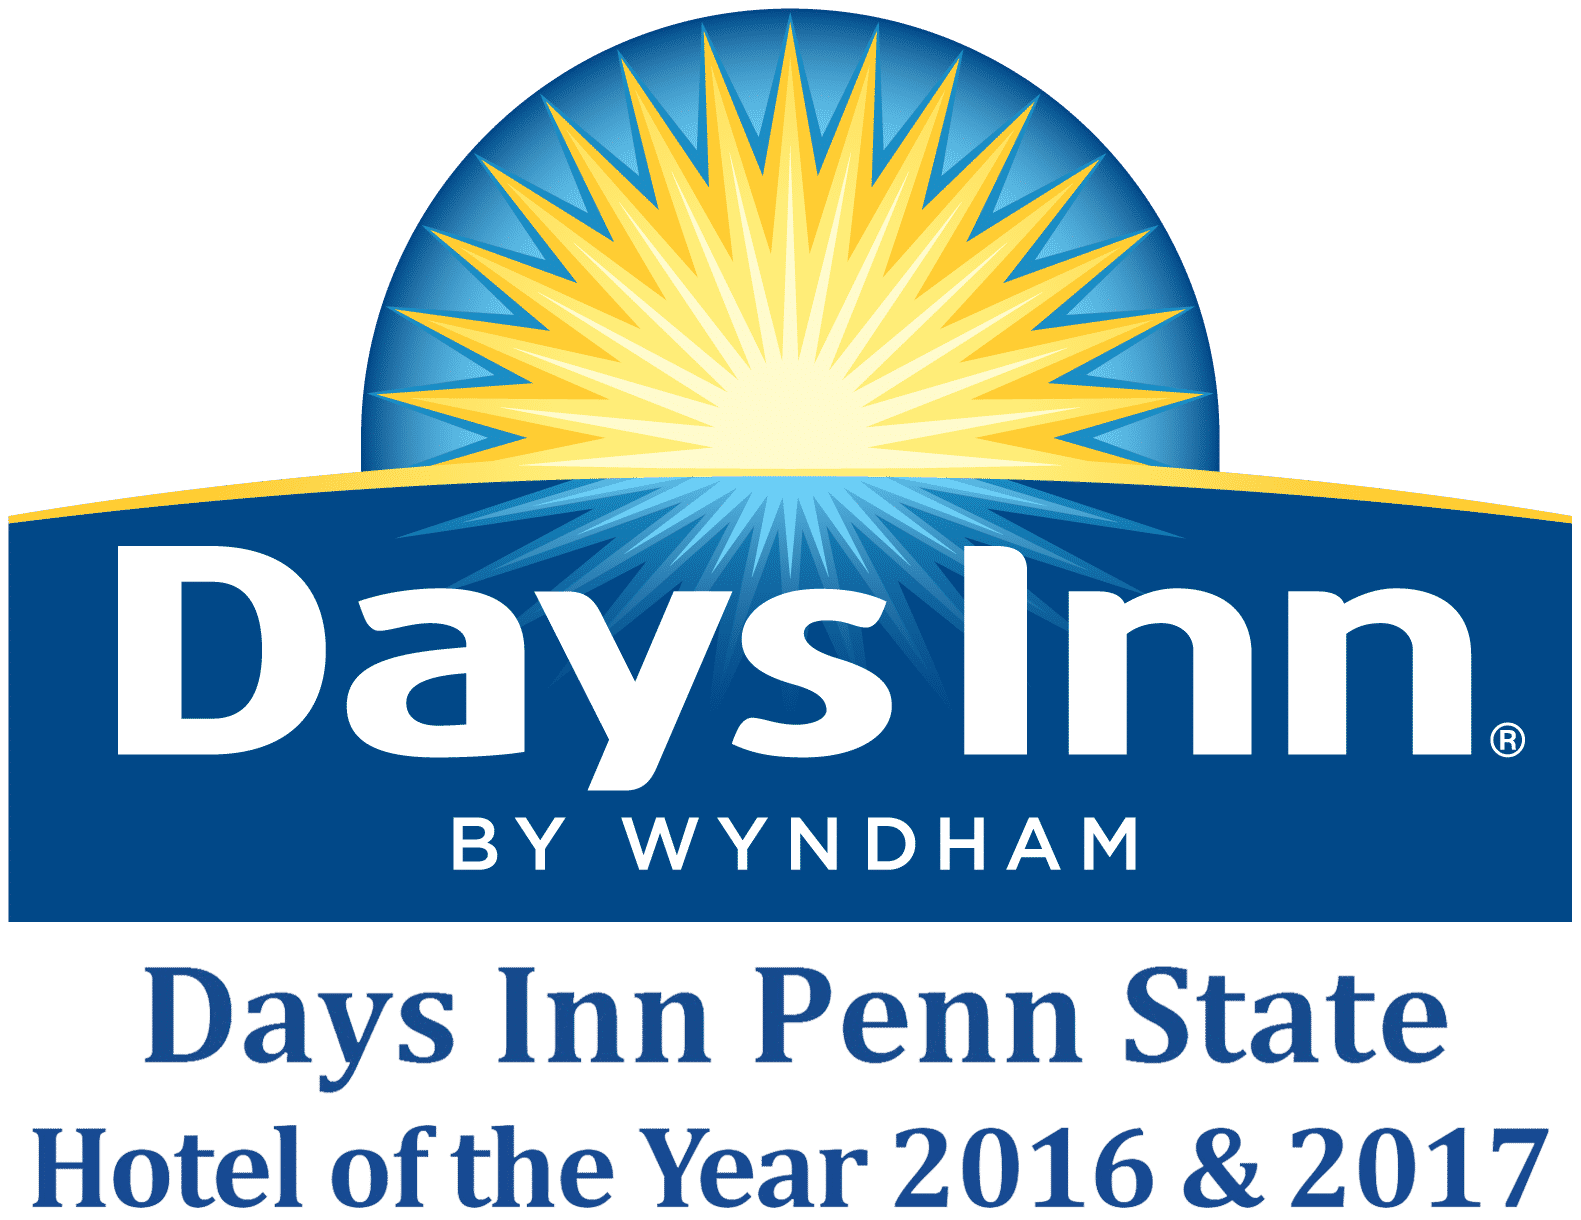 Days Inn Logo - Days Inn Penn State, State College, PA - Lion Country Lodging